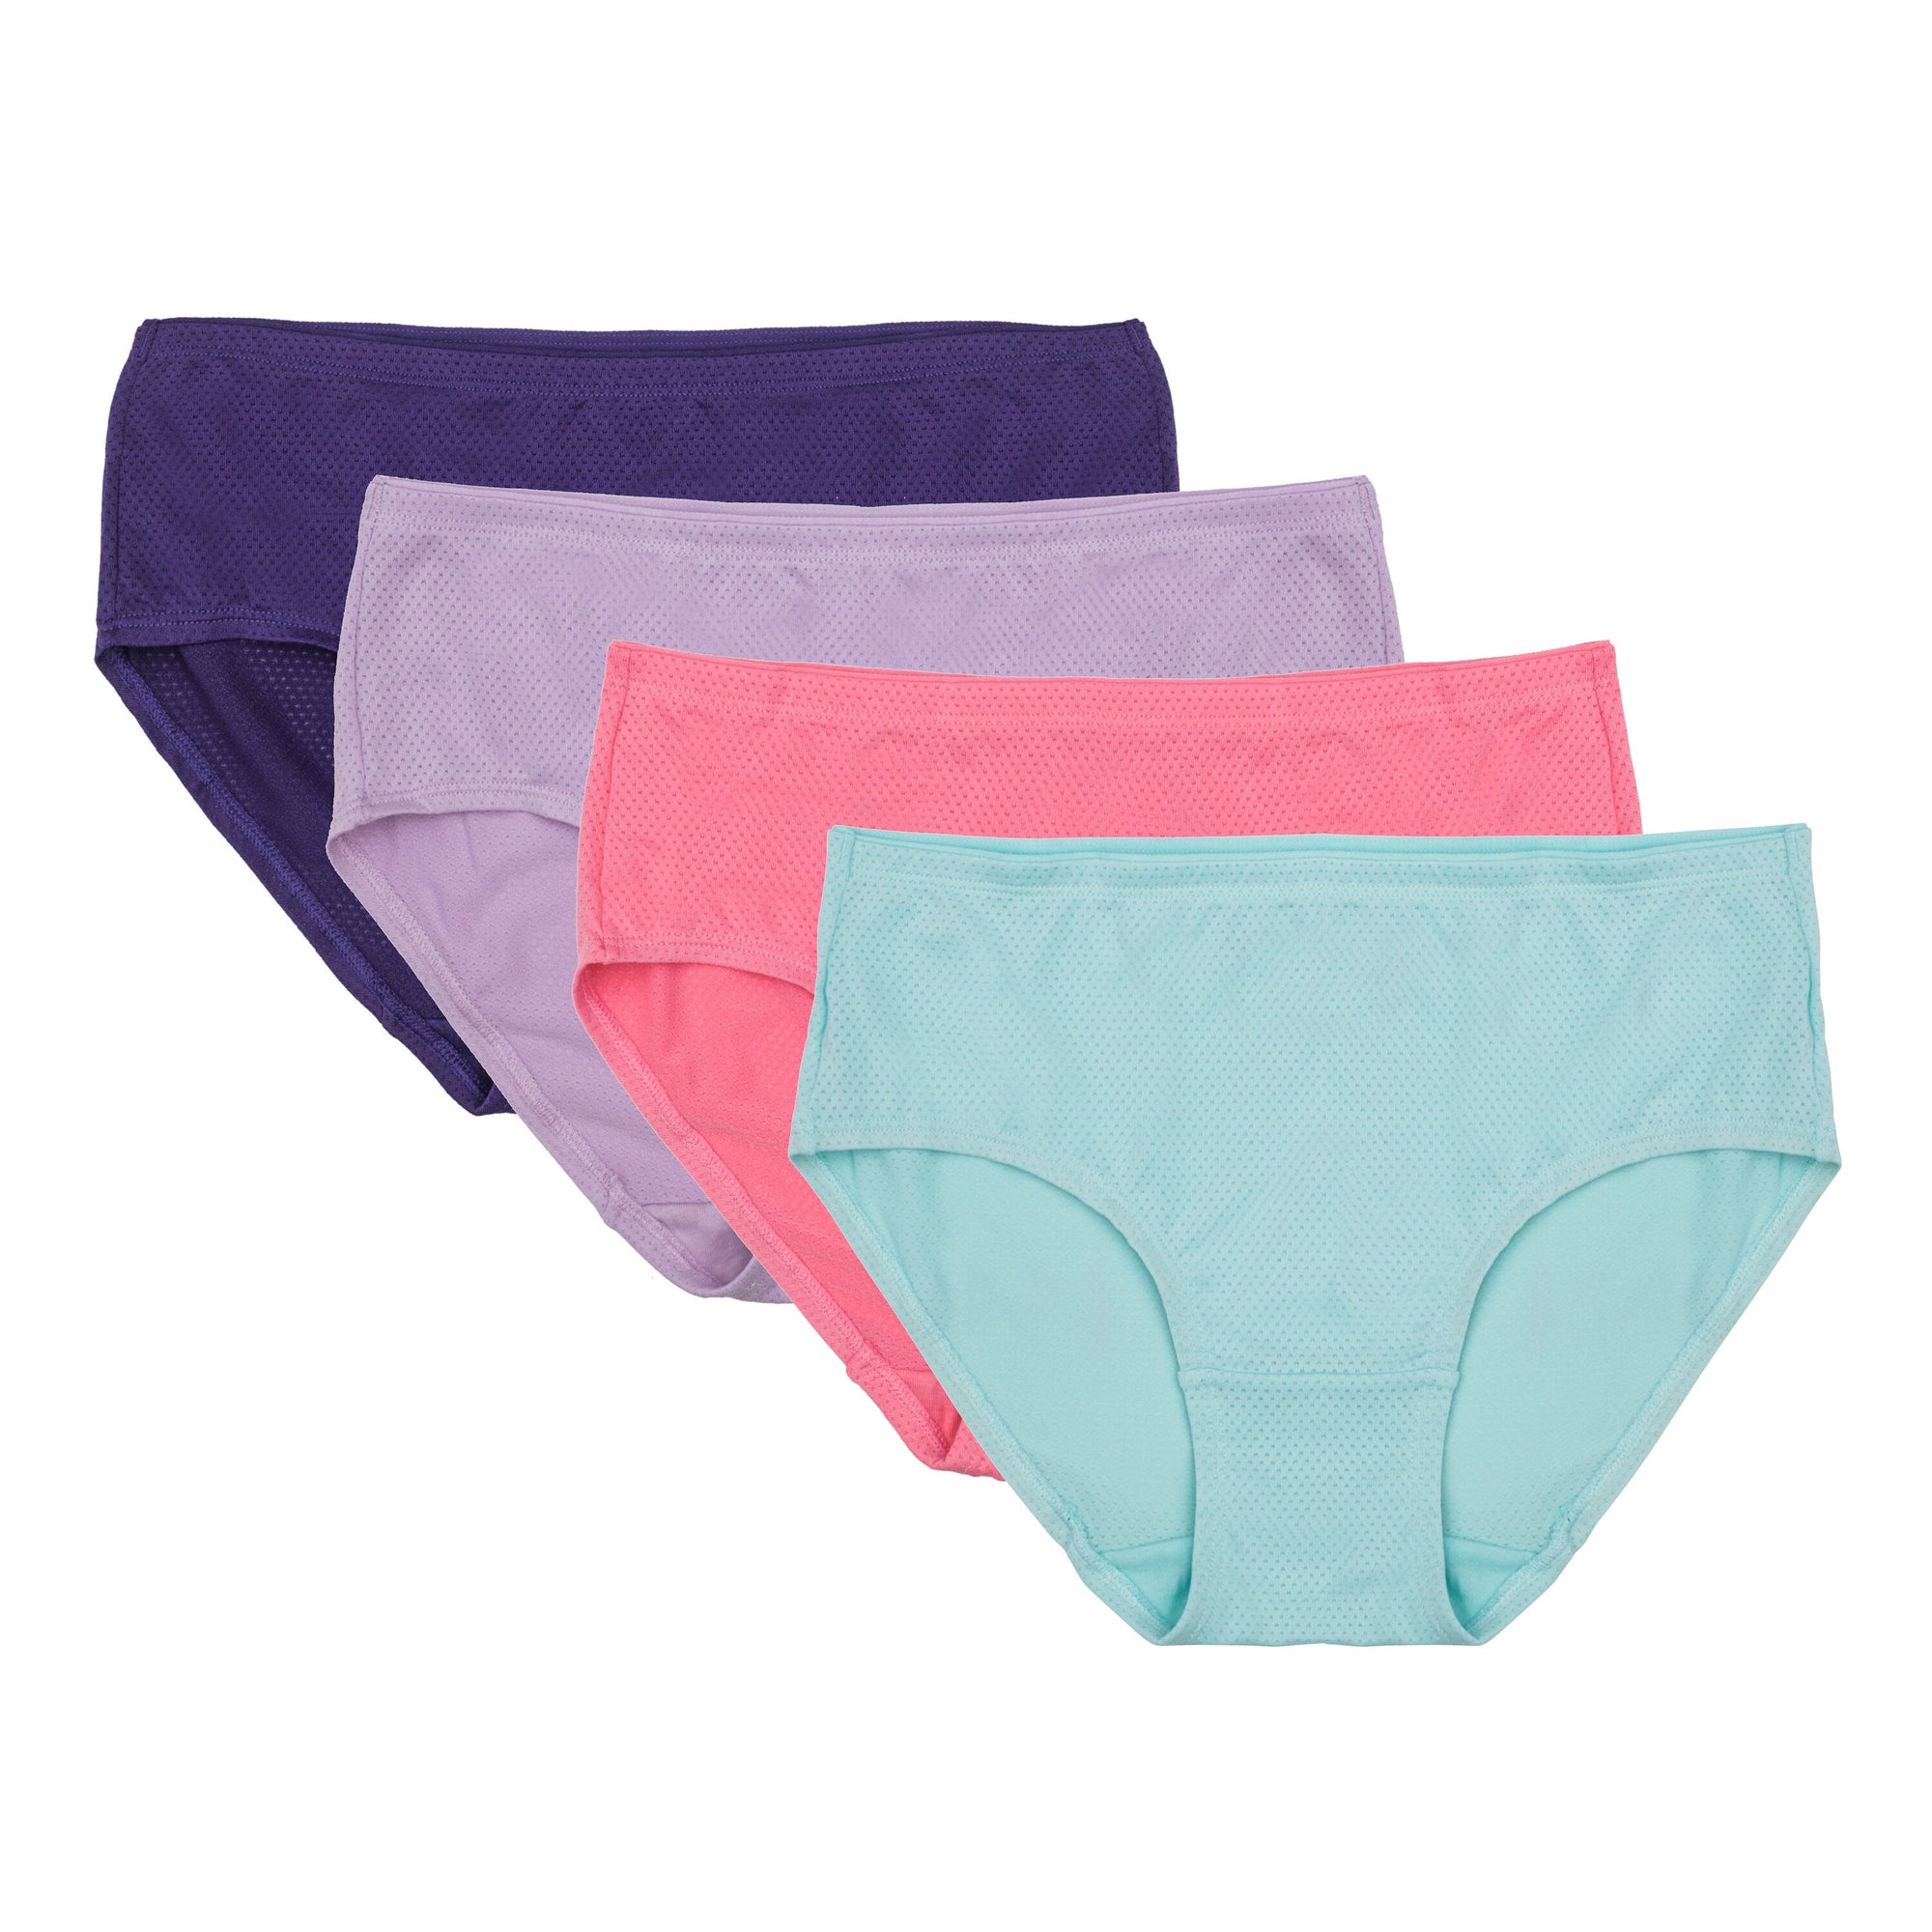 Buy Fruit of the Loom Women's Breathable 4 Pack Panties Online at